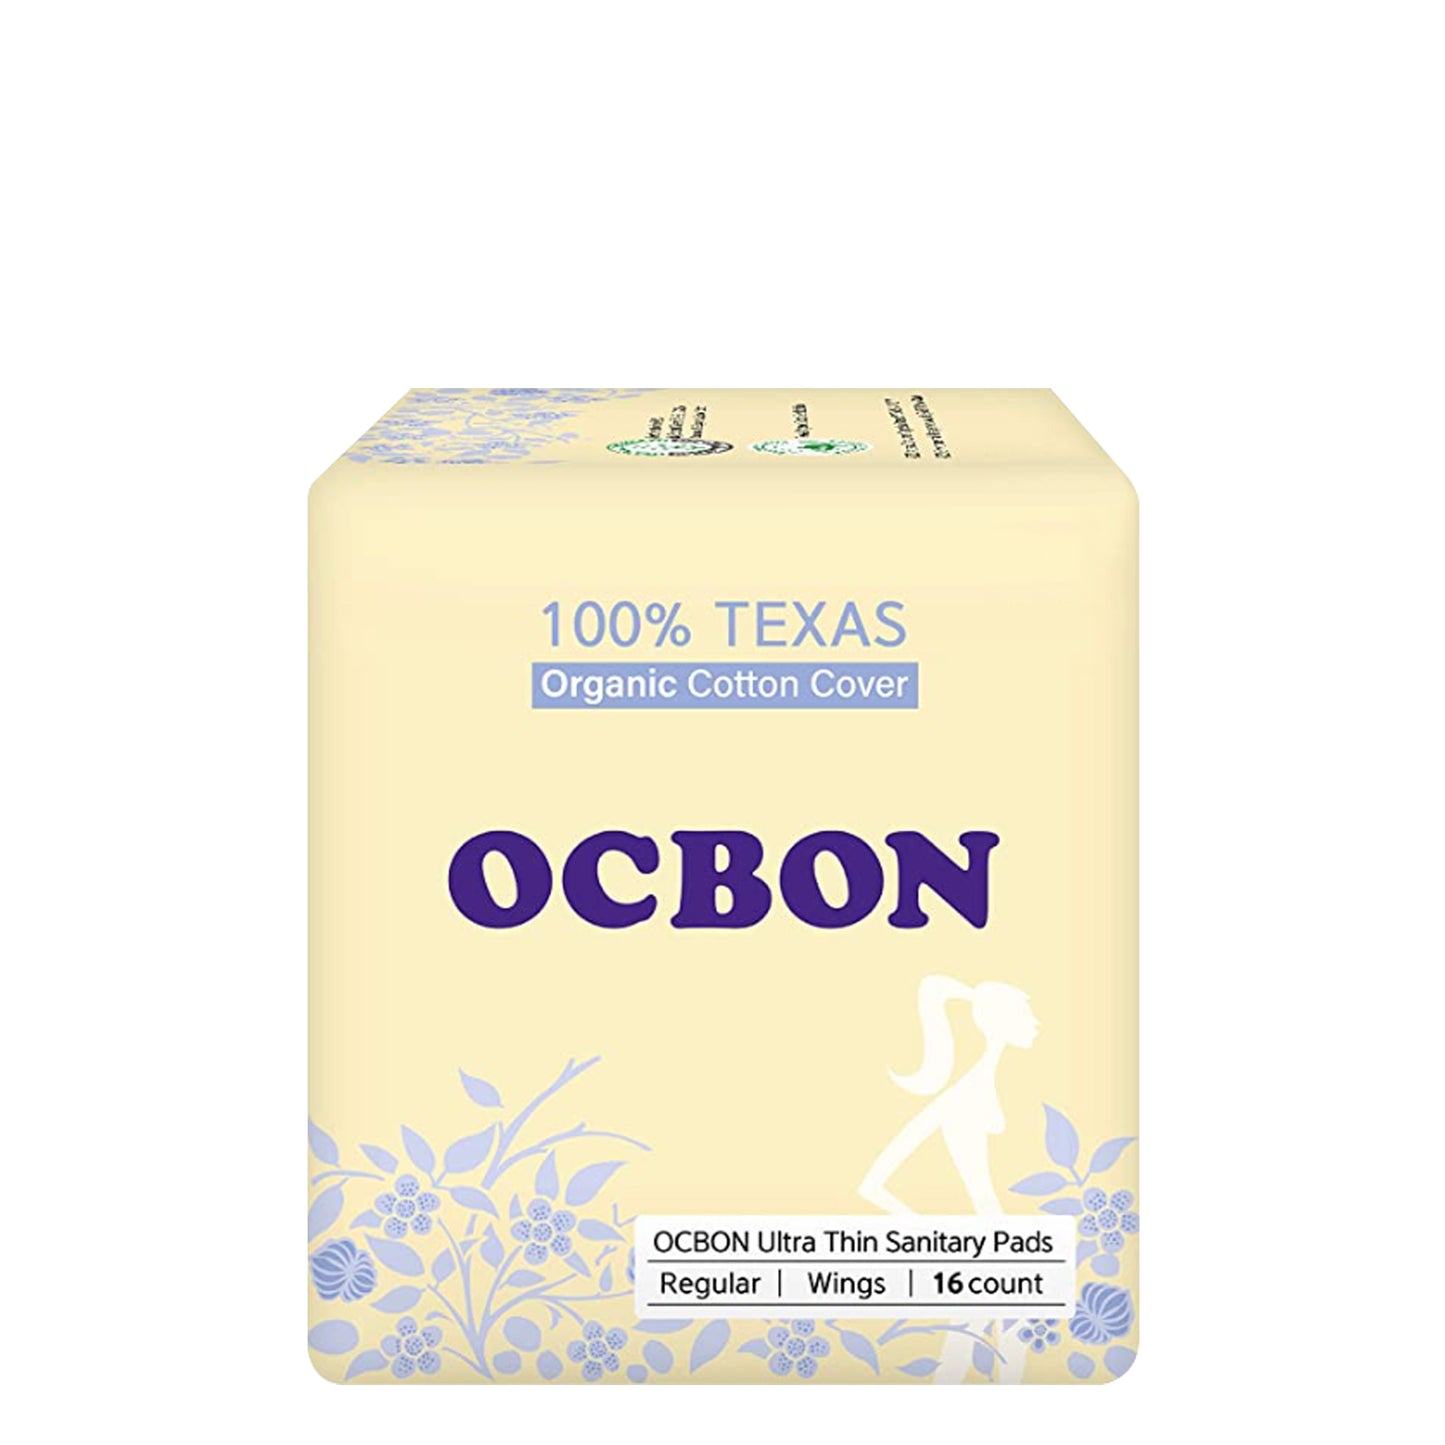 OCBON Ultra Thin Sanitary Pads 1-Pack (Regular, 25cm, 16 Counts)